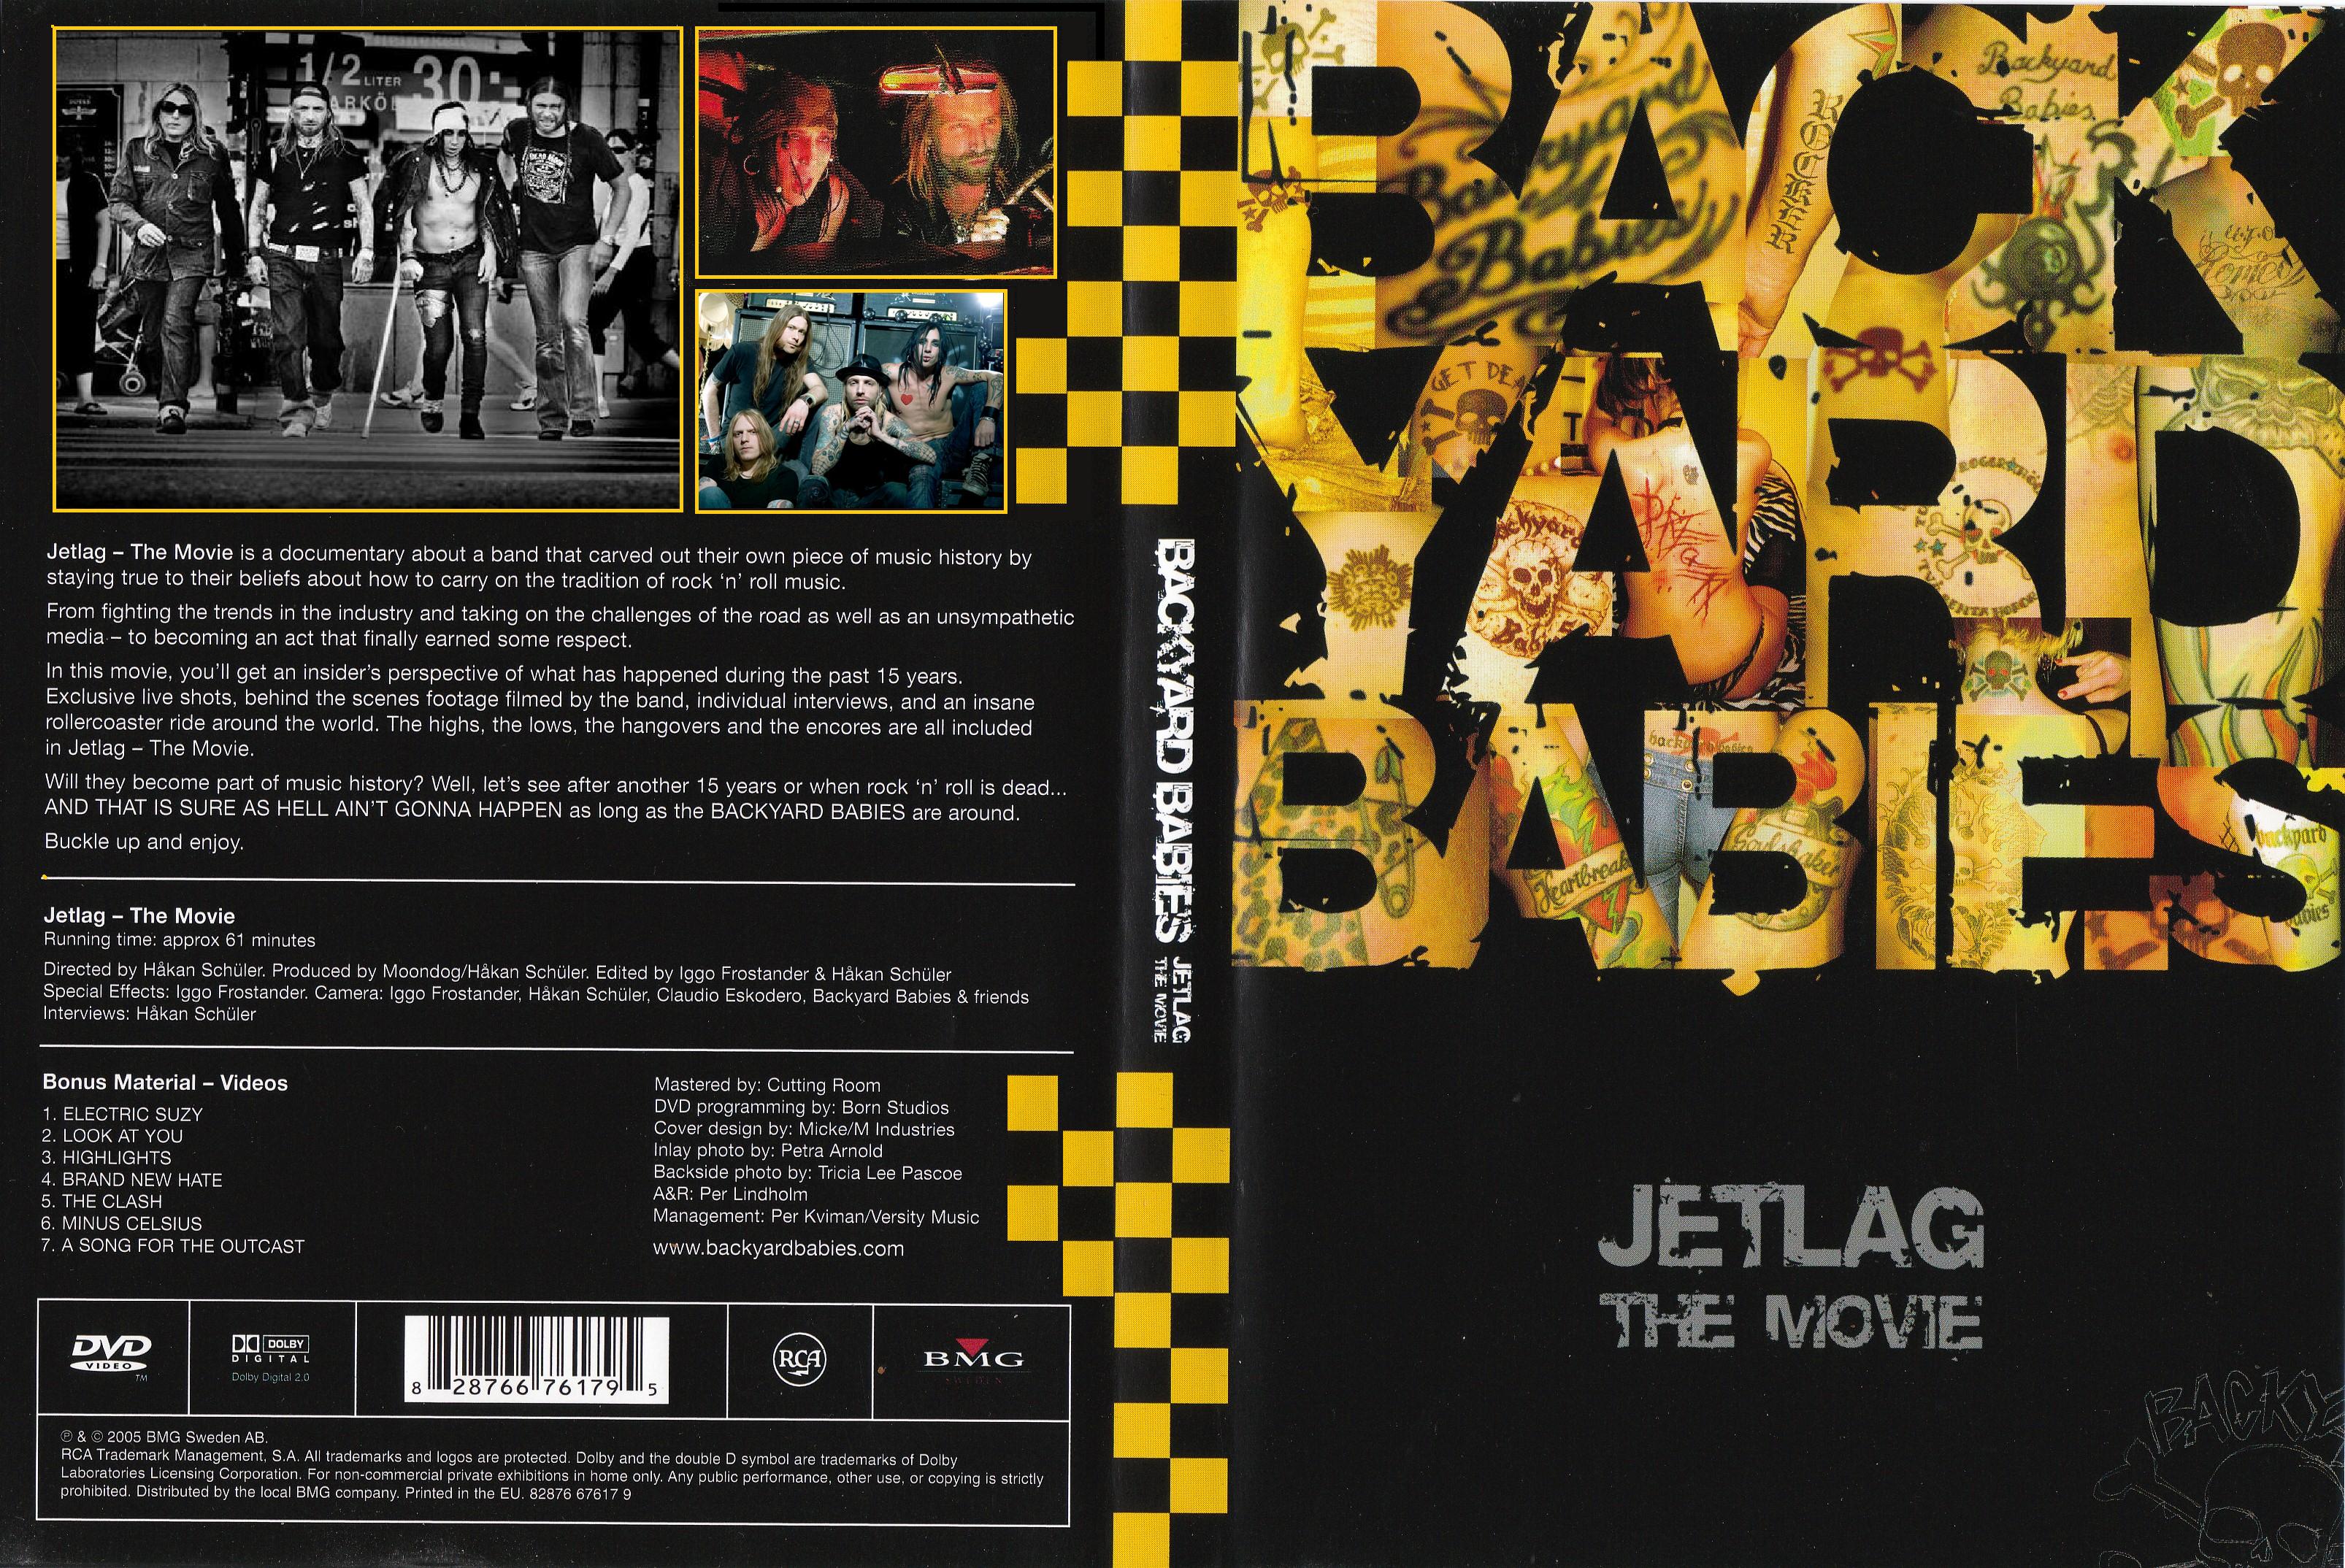 Jaquette DVD Backyard Babies Jetlag Movie custom